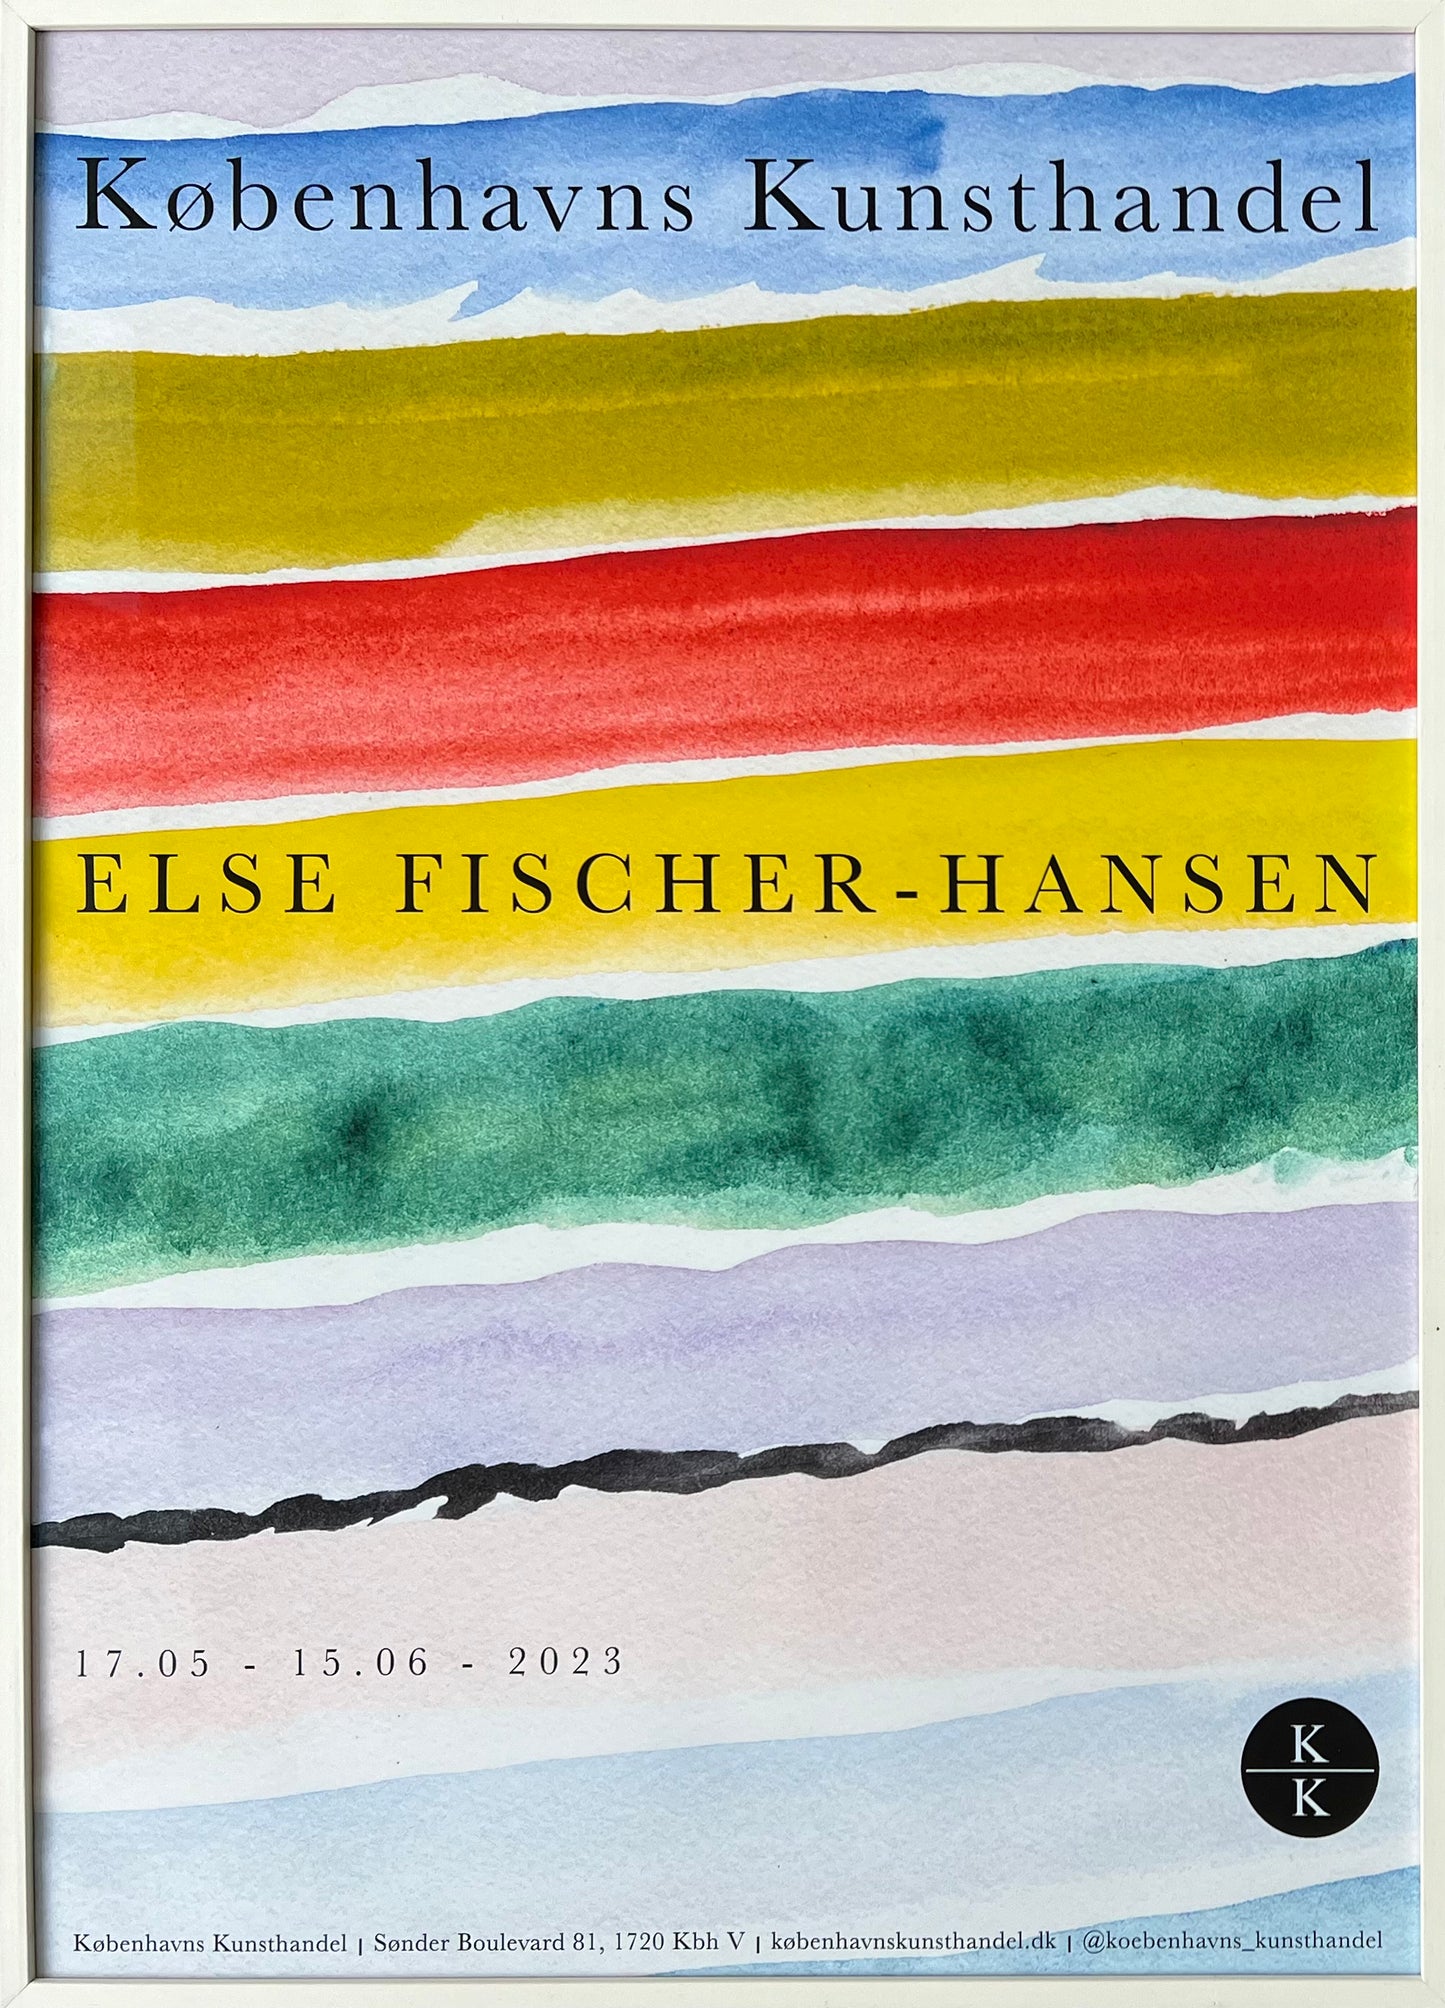 Else Fischer-Hansen. Exhibition poster, 2023